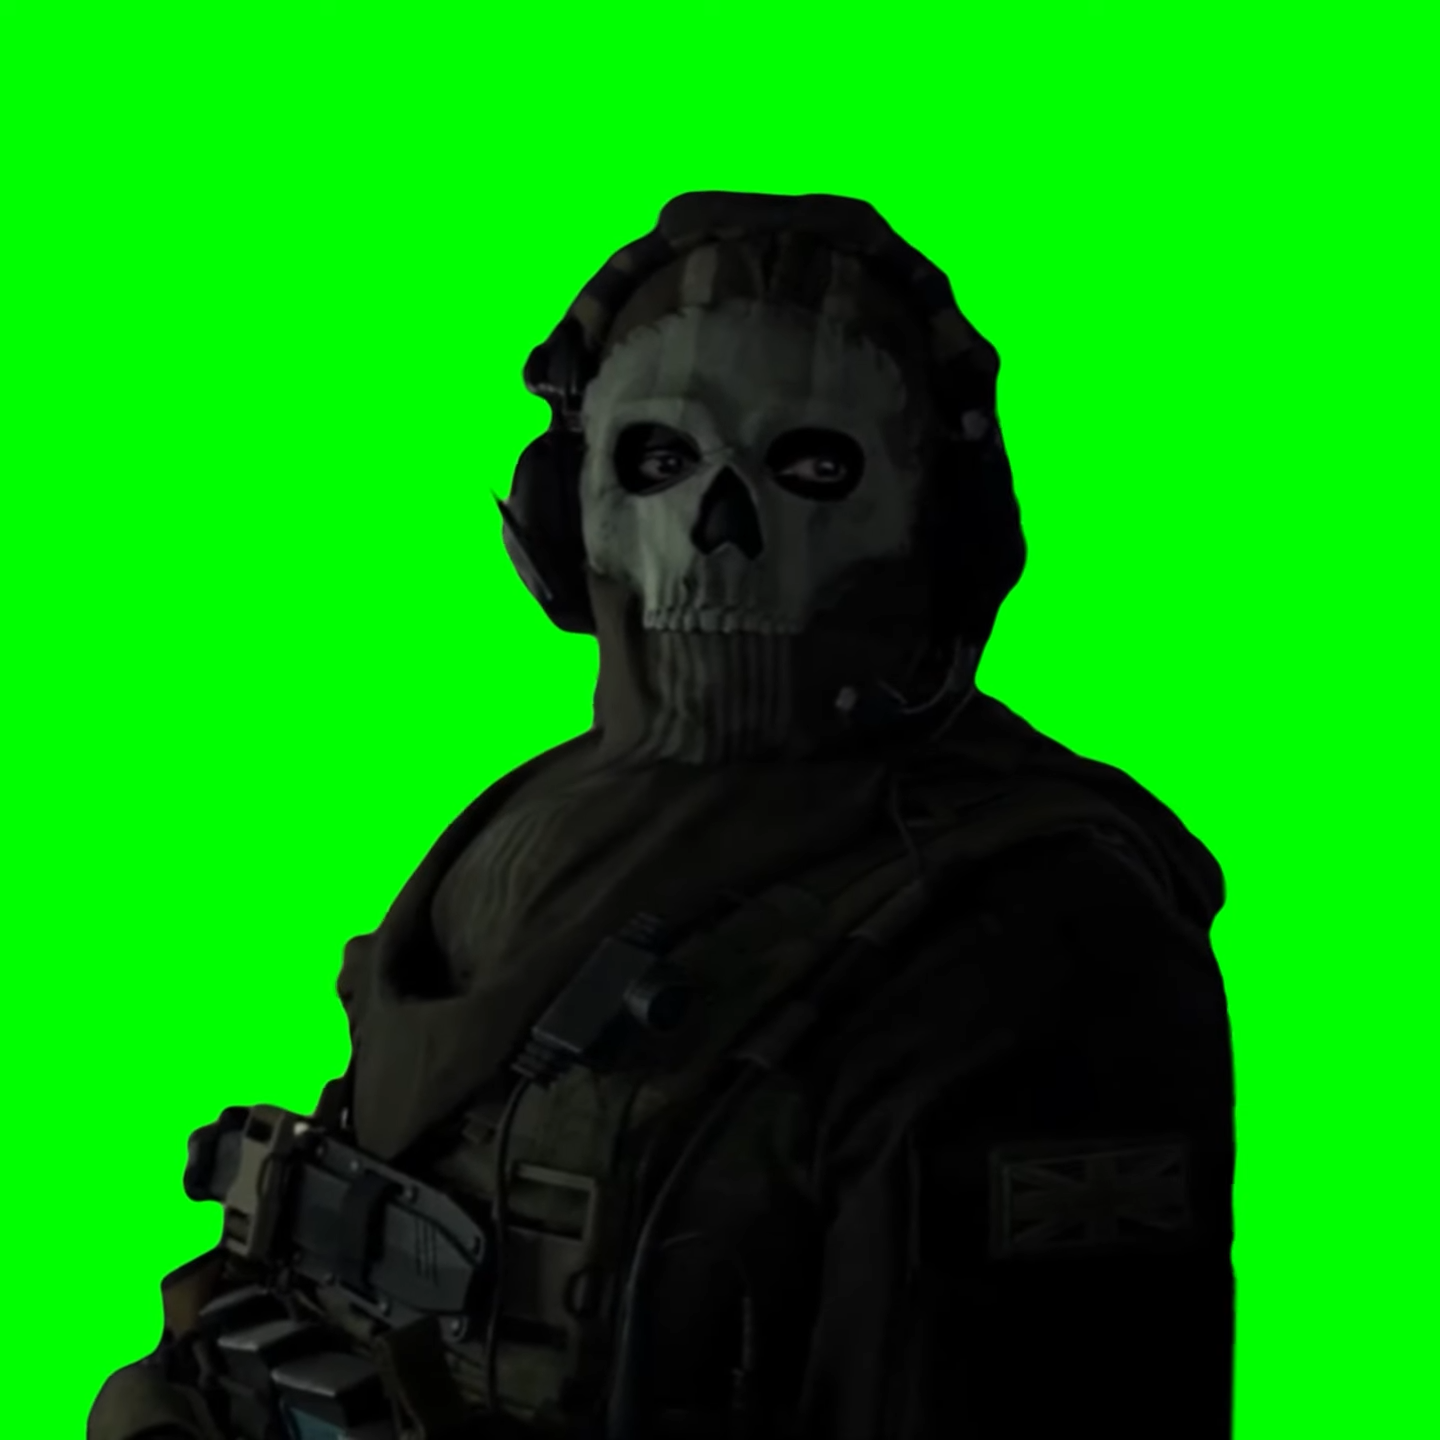 MW2 - Sad Ghost Staring Meme (Green Screen) – CreatorSet